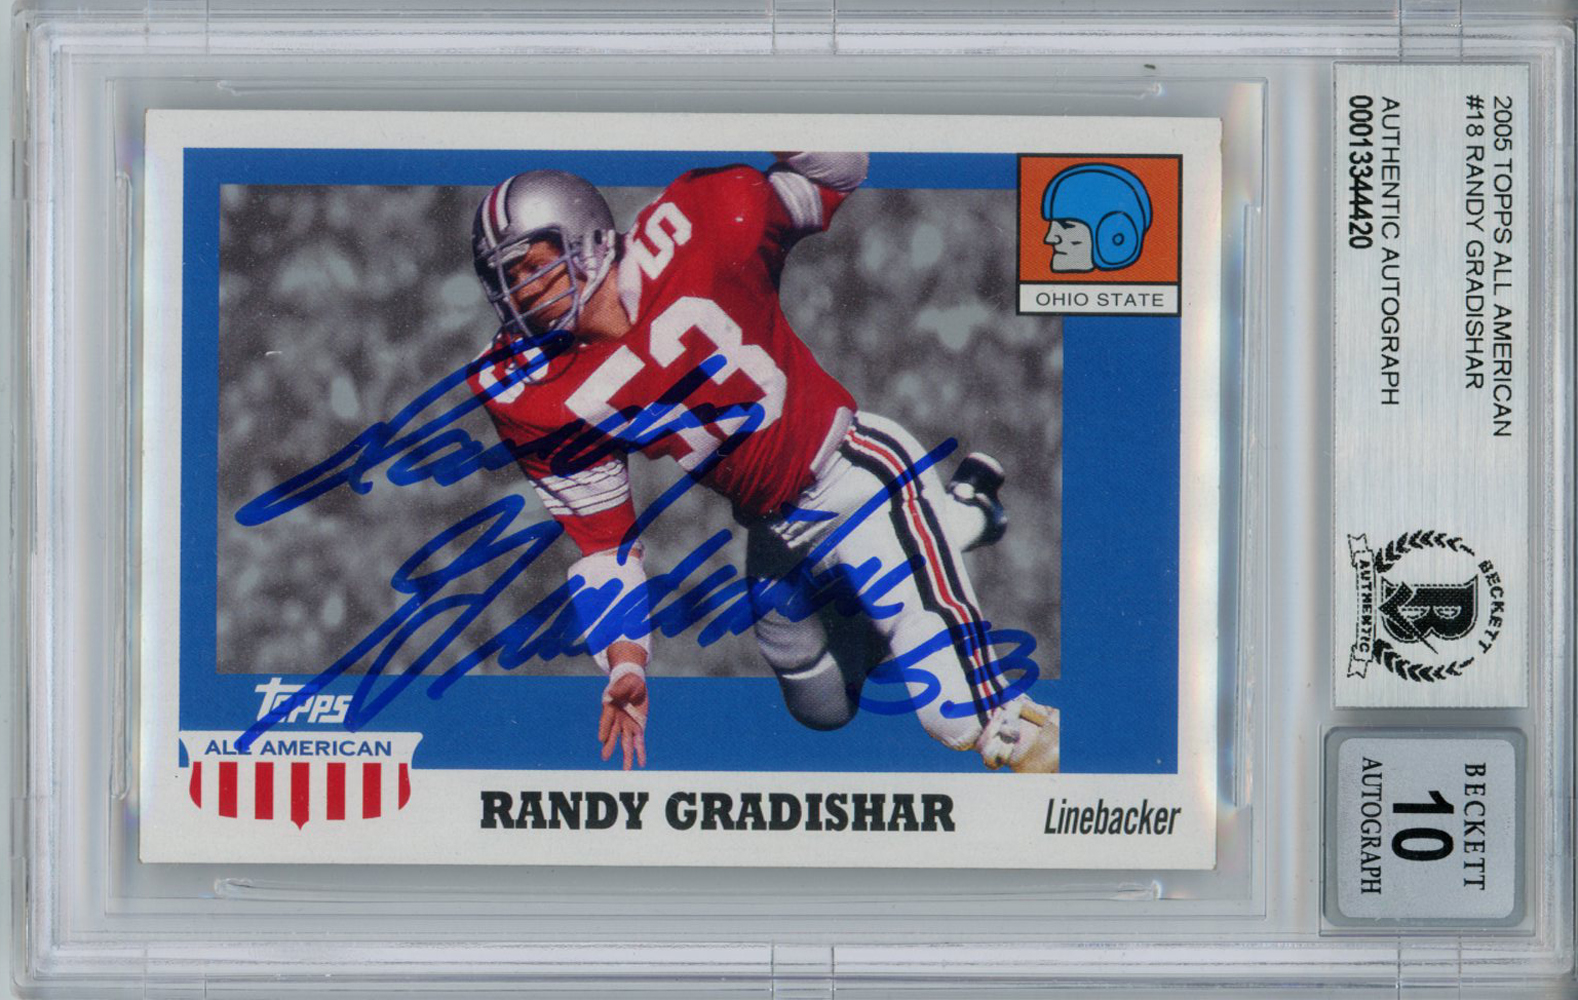 Randy Gradishar Autographed 2005 Topps All American Trading Card BAS Slab